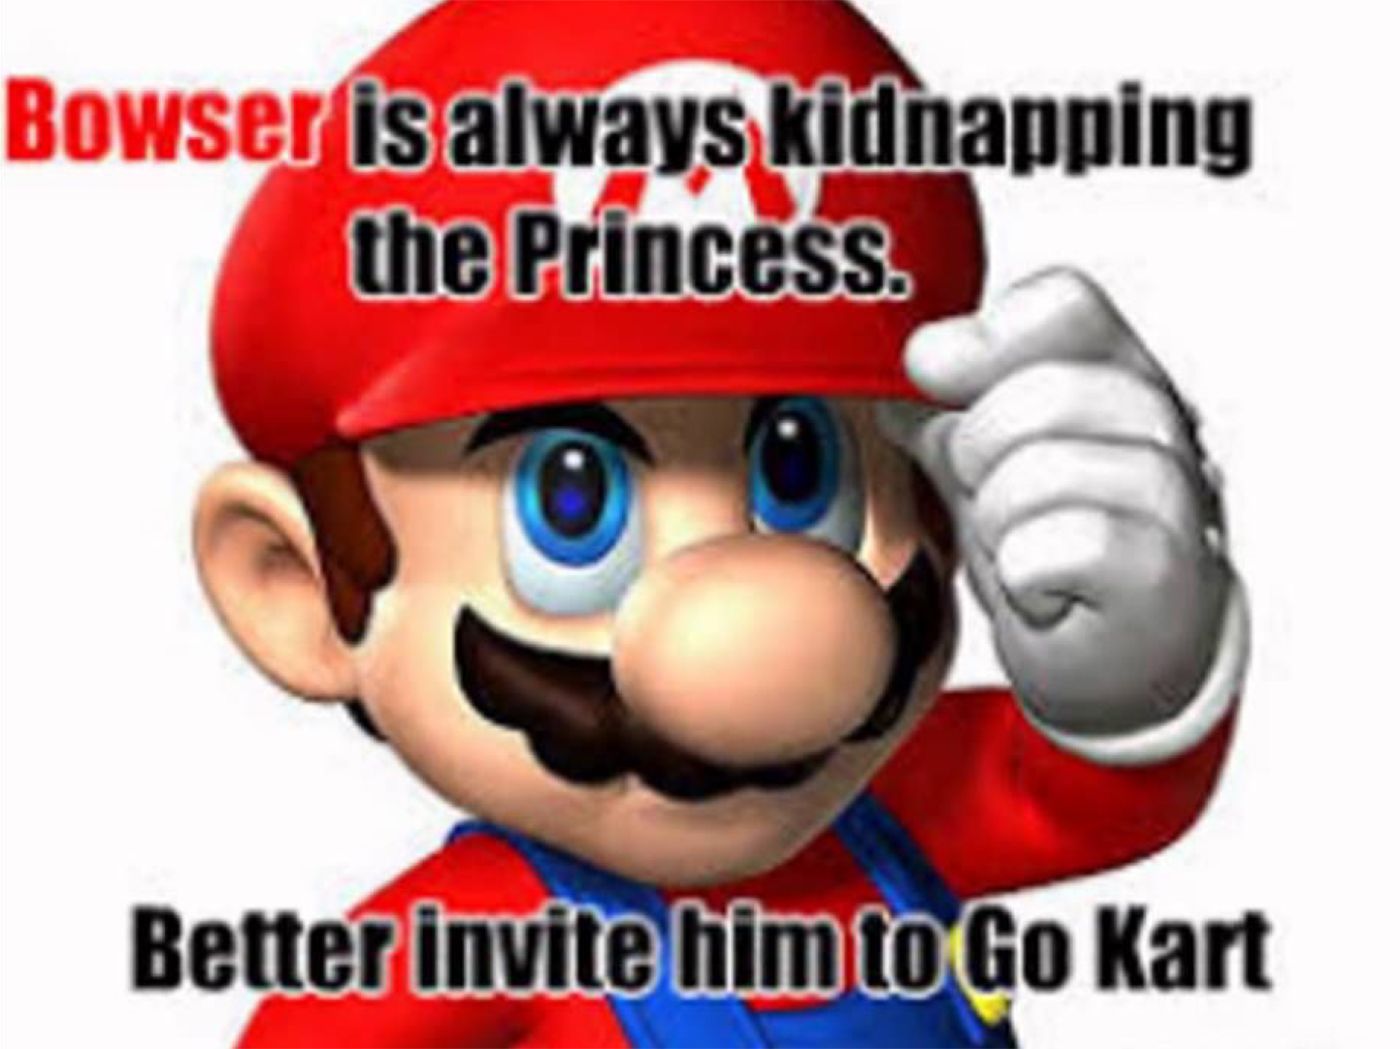 Its A Meme Mario! 15 Hilarious Nintendo Memes